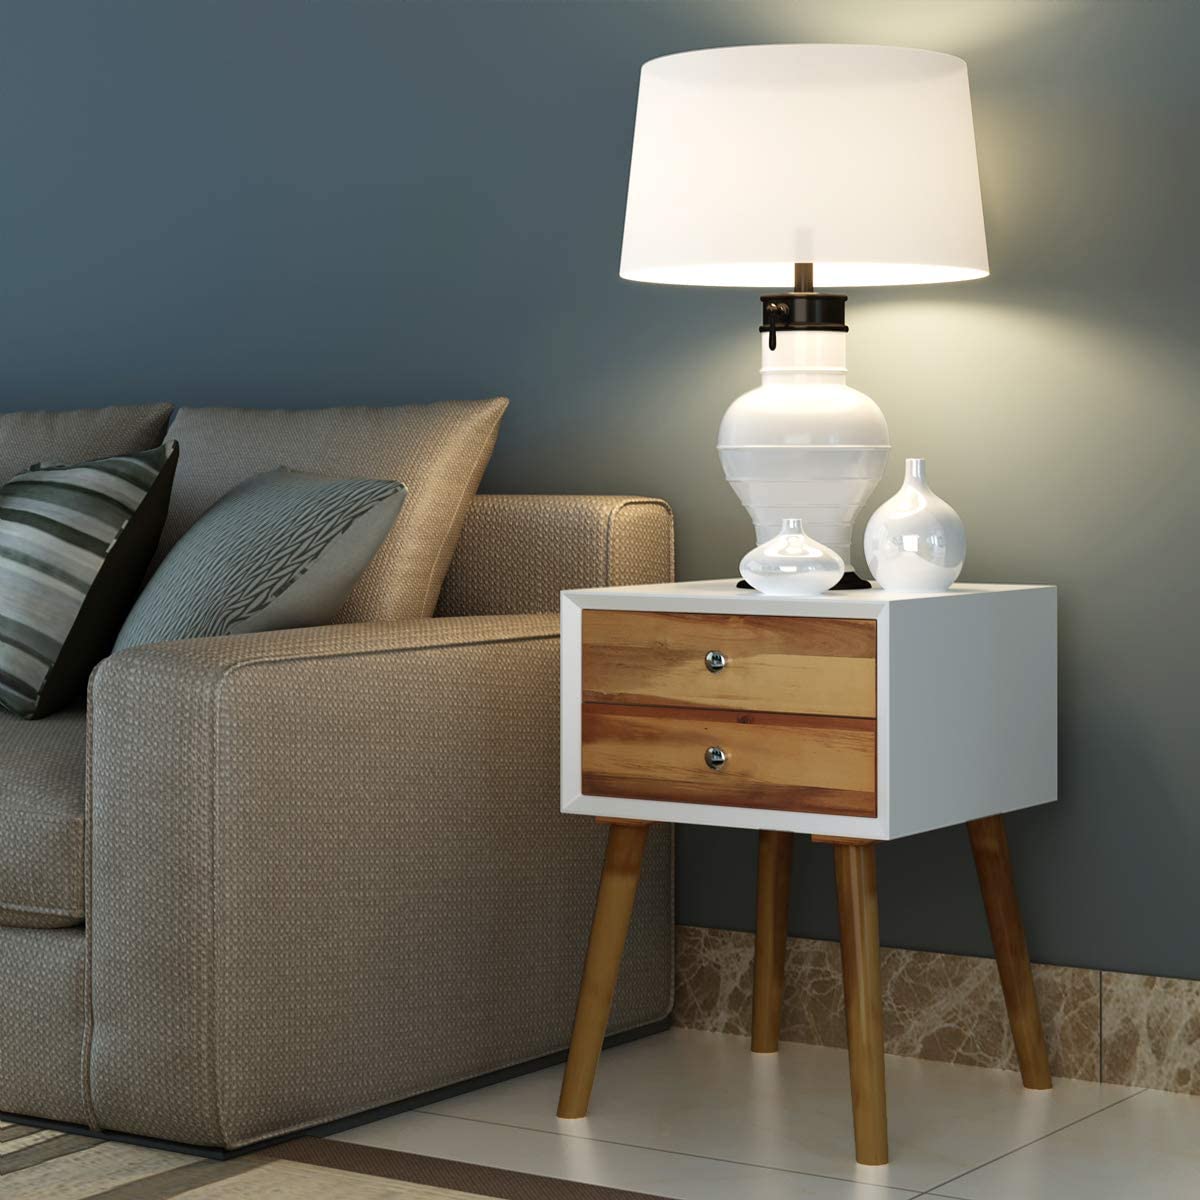 Multipurpose for Bedroom, Living Room Home Furniture Nightstand